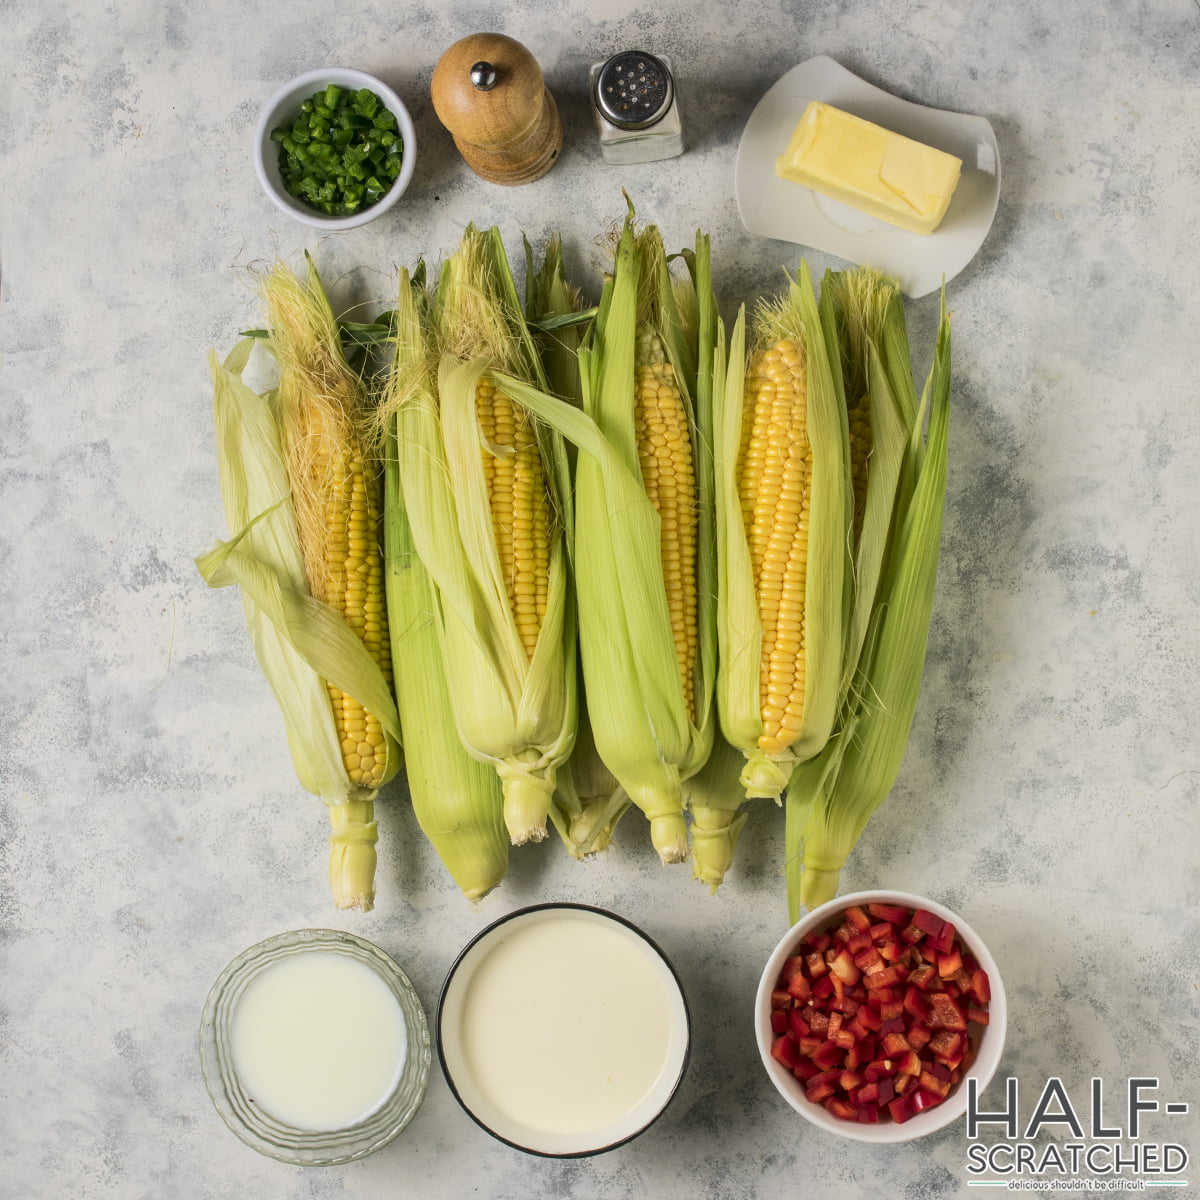 Pioneer Woman's Corn Casserole Ingredients